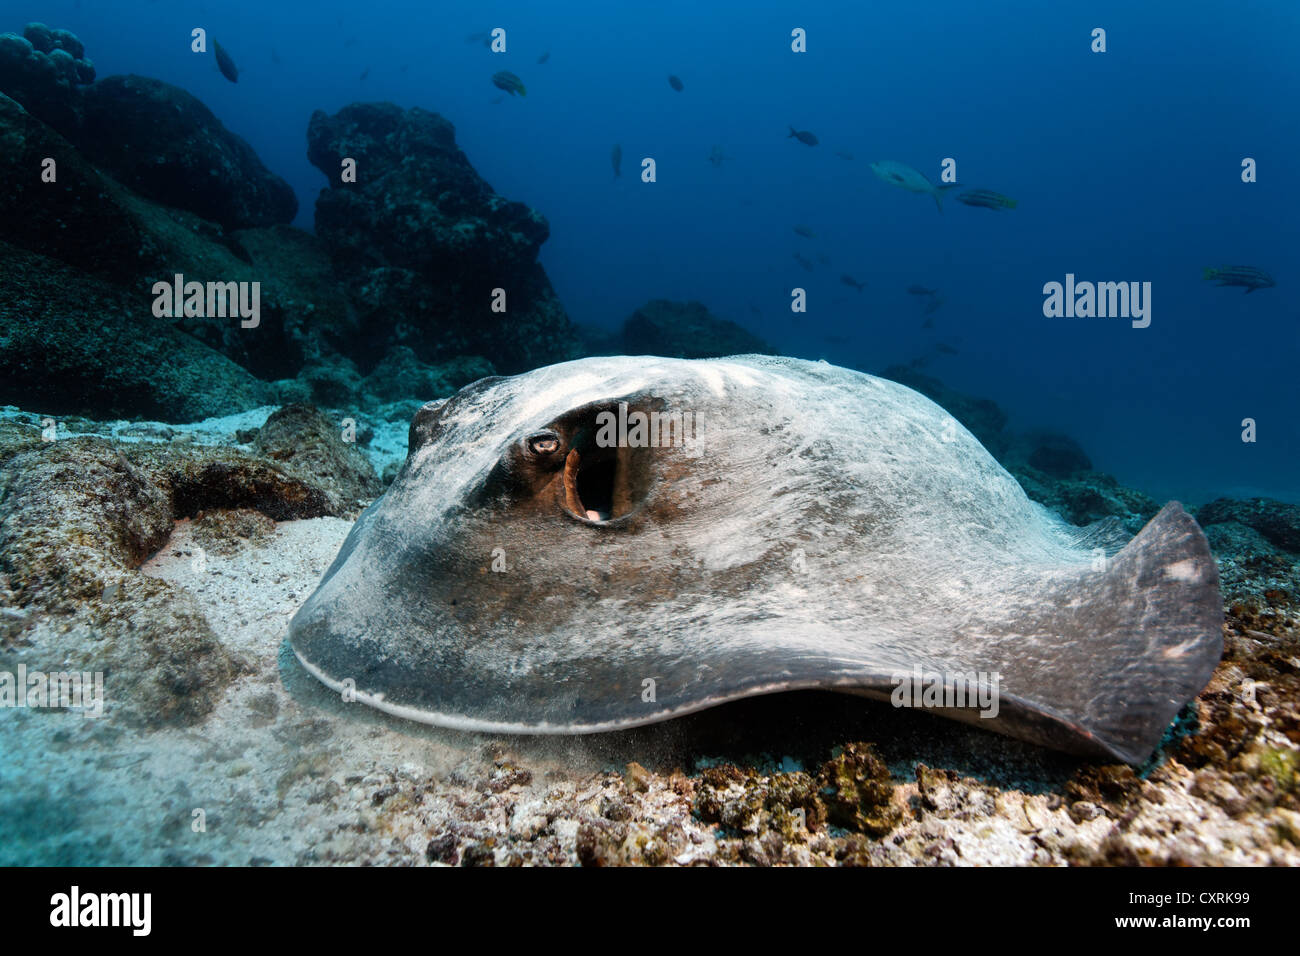 Diamond stingray (Dasyatis brevis), lying on sandy seafloor with coral rubble, Punta Cormorant, Floreana Island Stock Photo